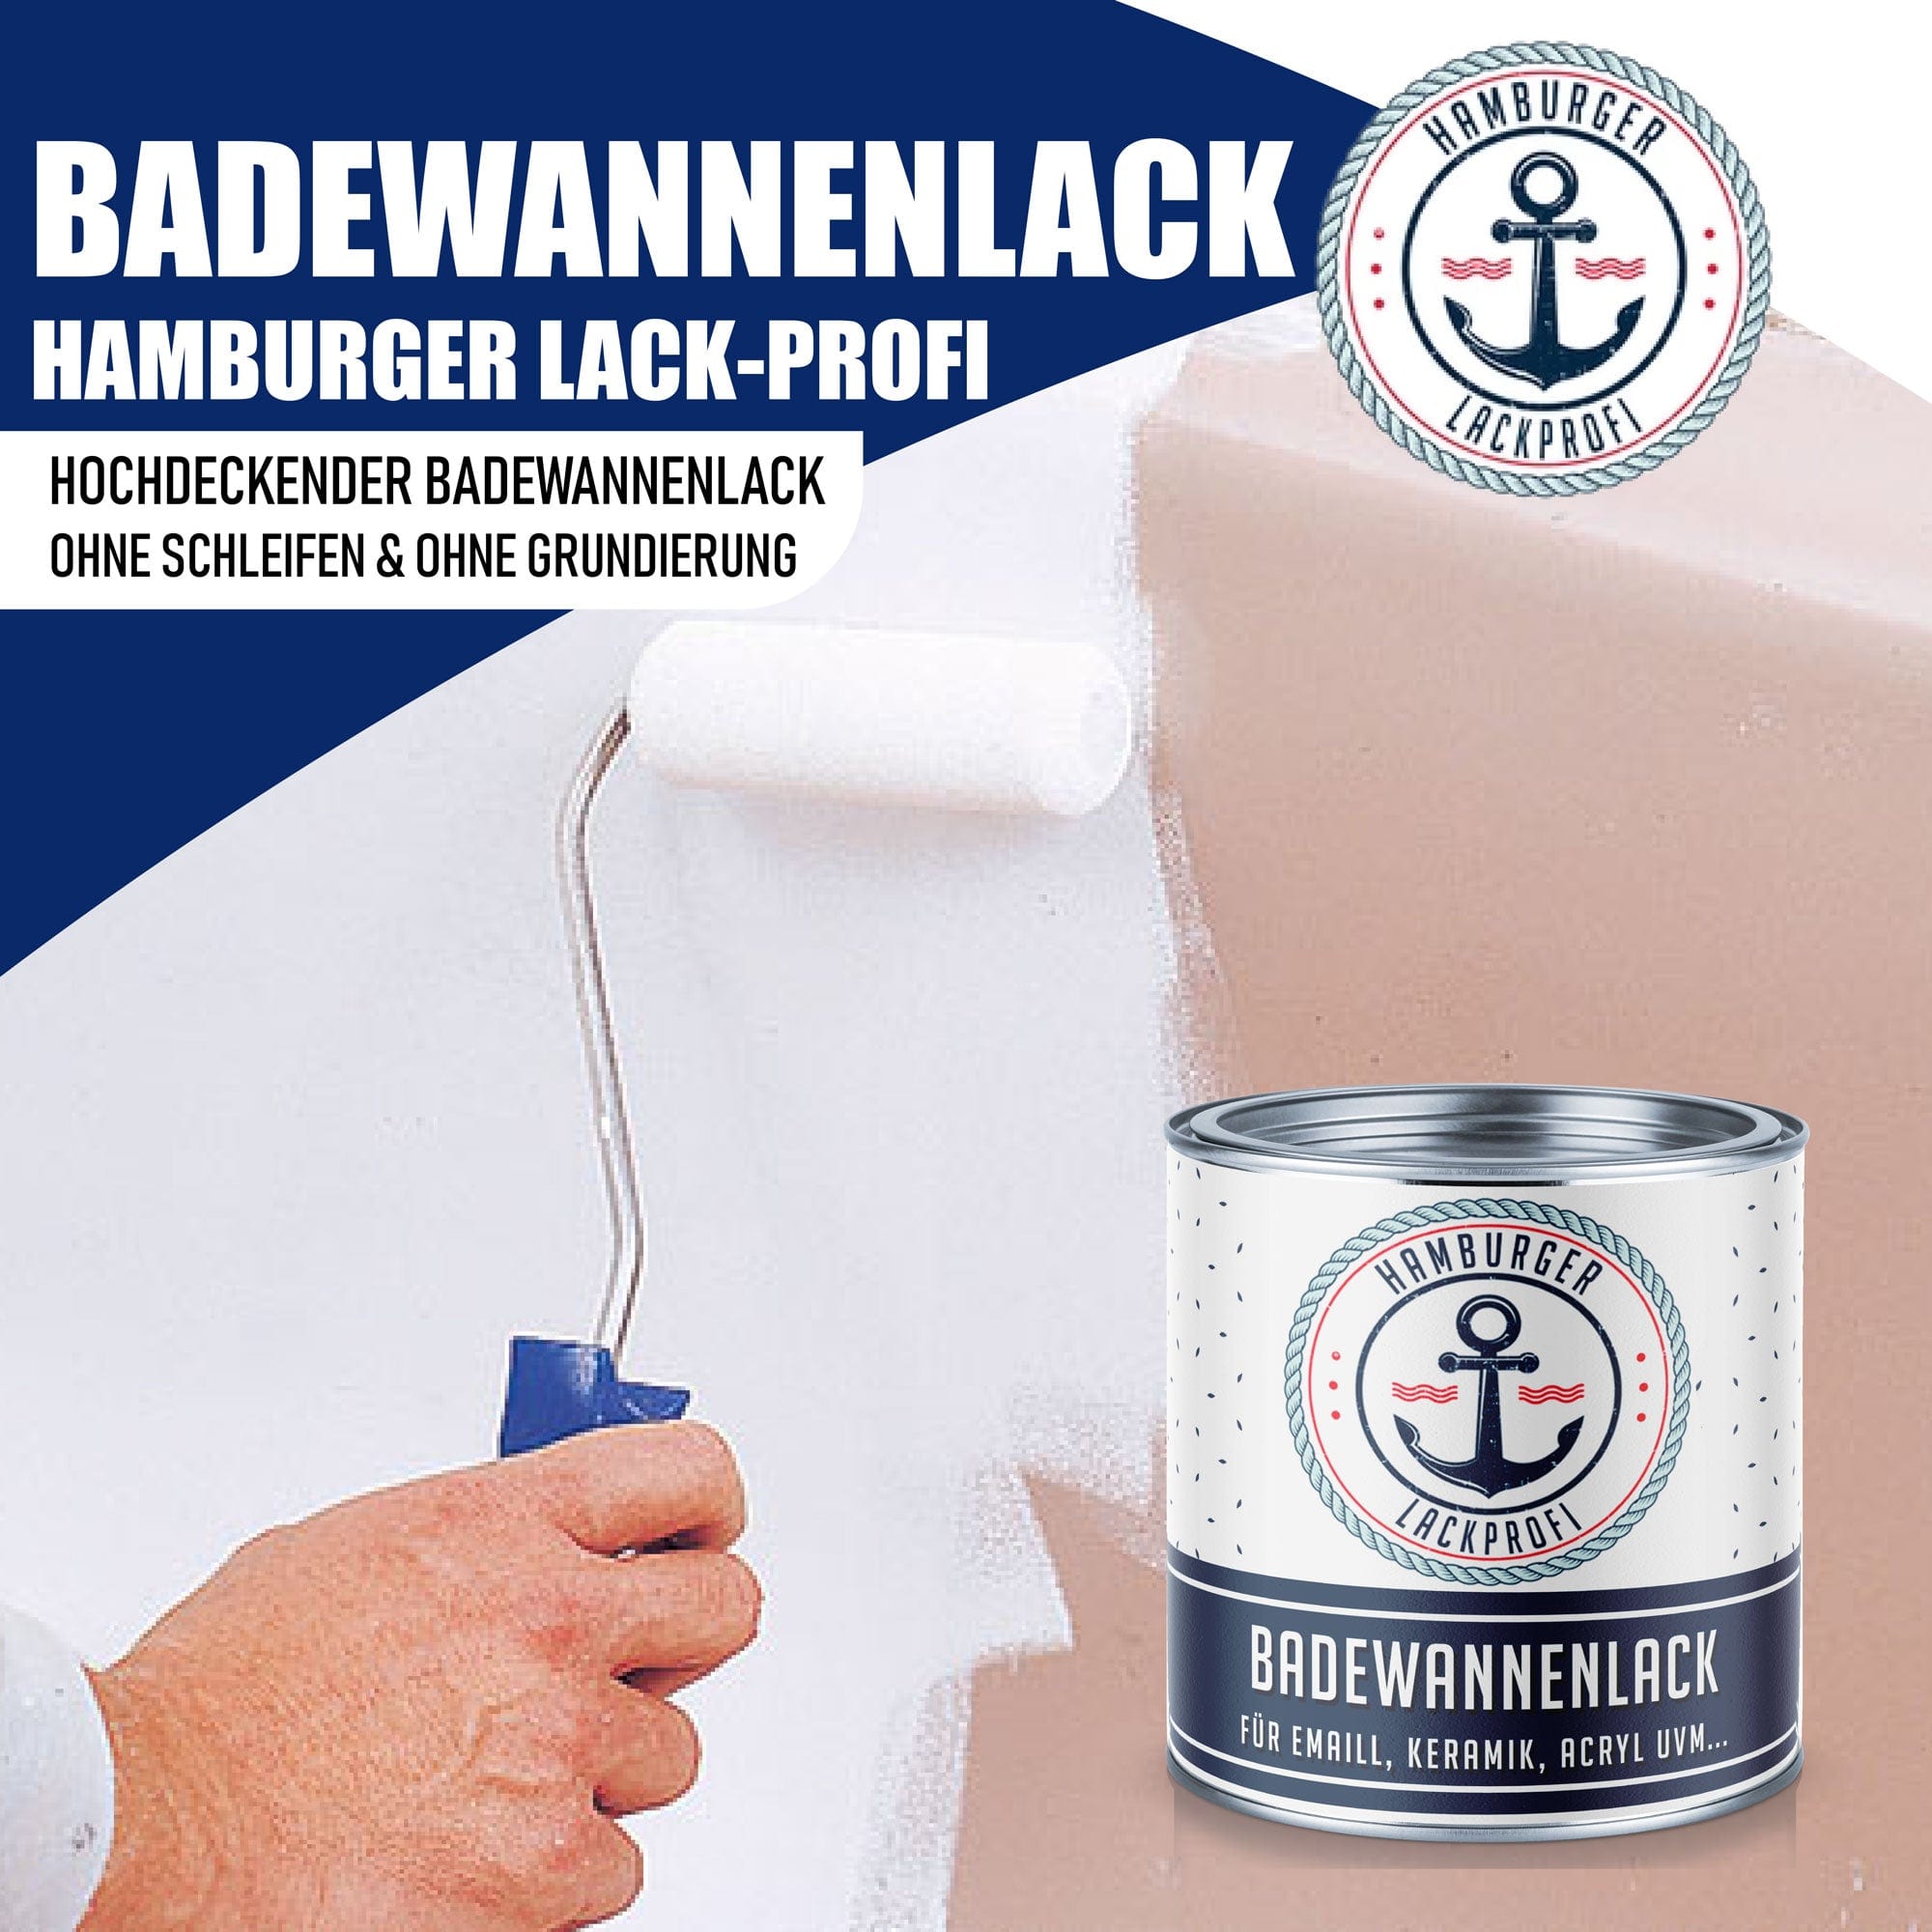 Hamburger Lack-Profi Badewannenlack Hamburger Lack-Profi 2K Badewannenlack Maisgelb RAL 1006 - Glänzend / Seidenmatt / Matt